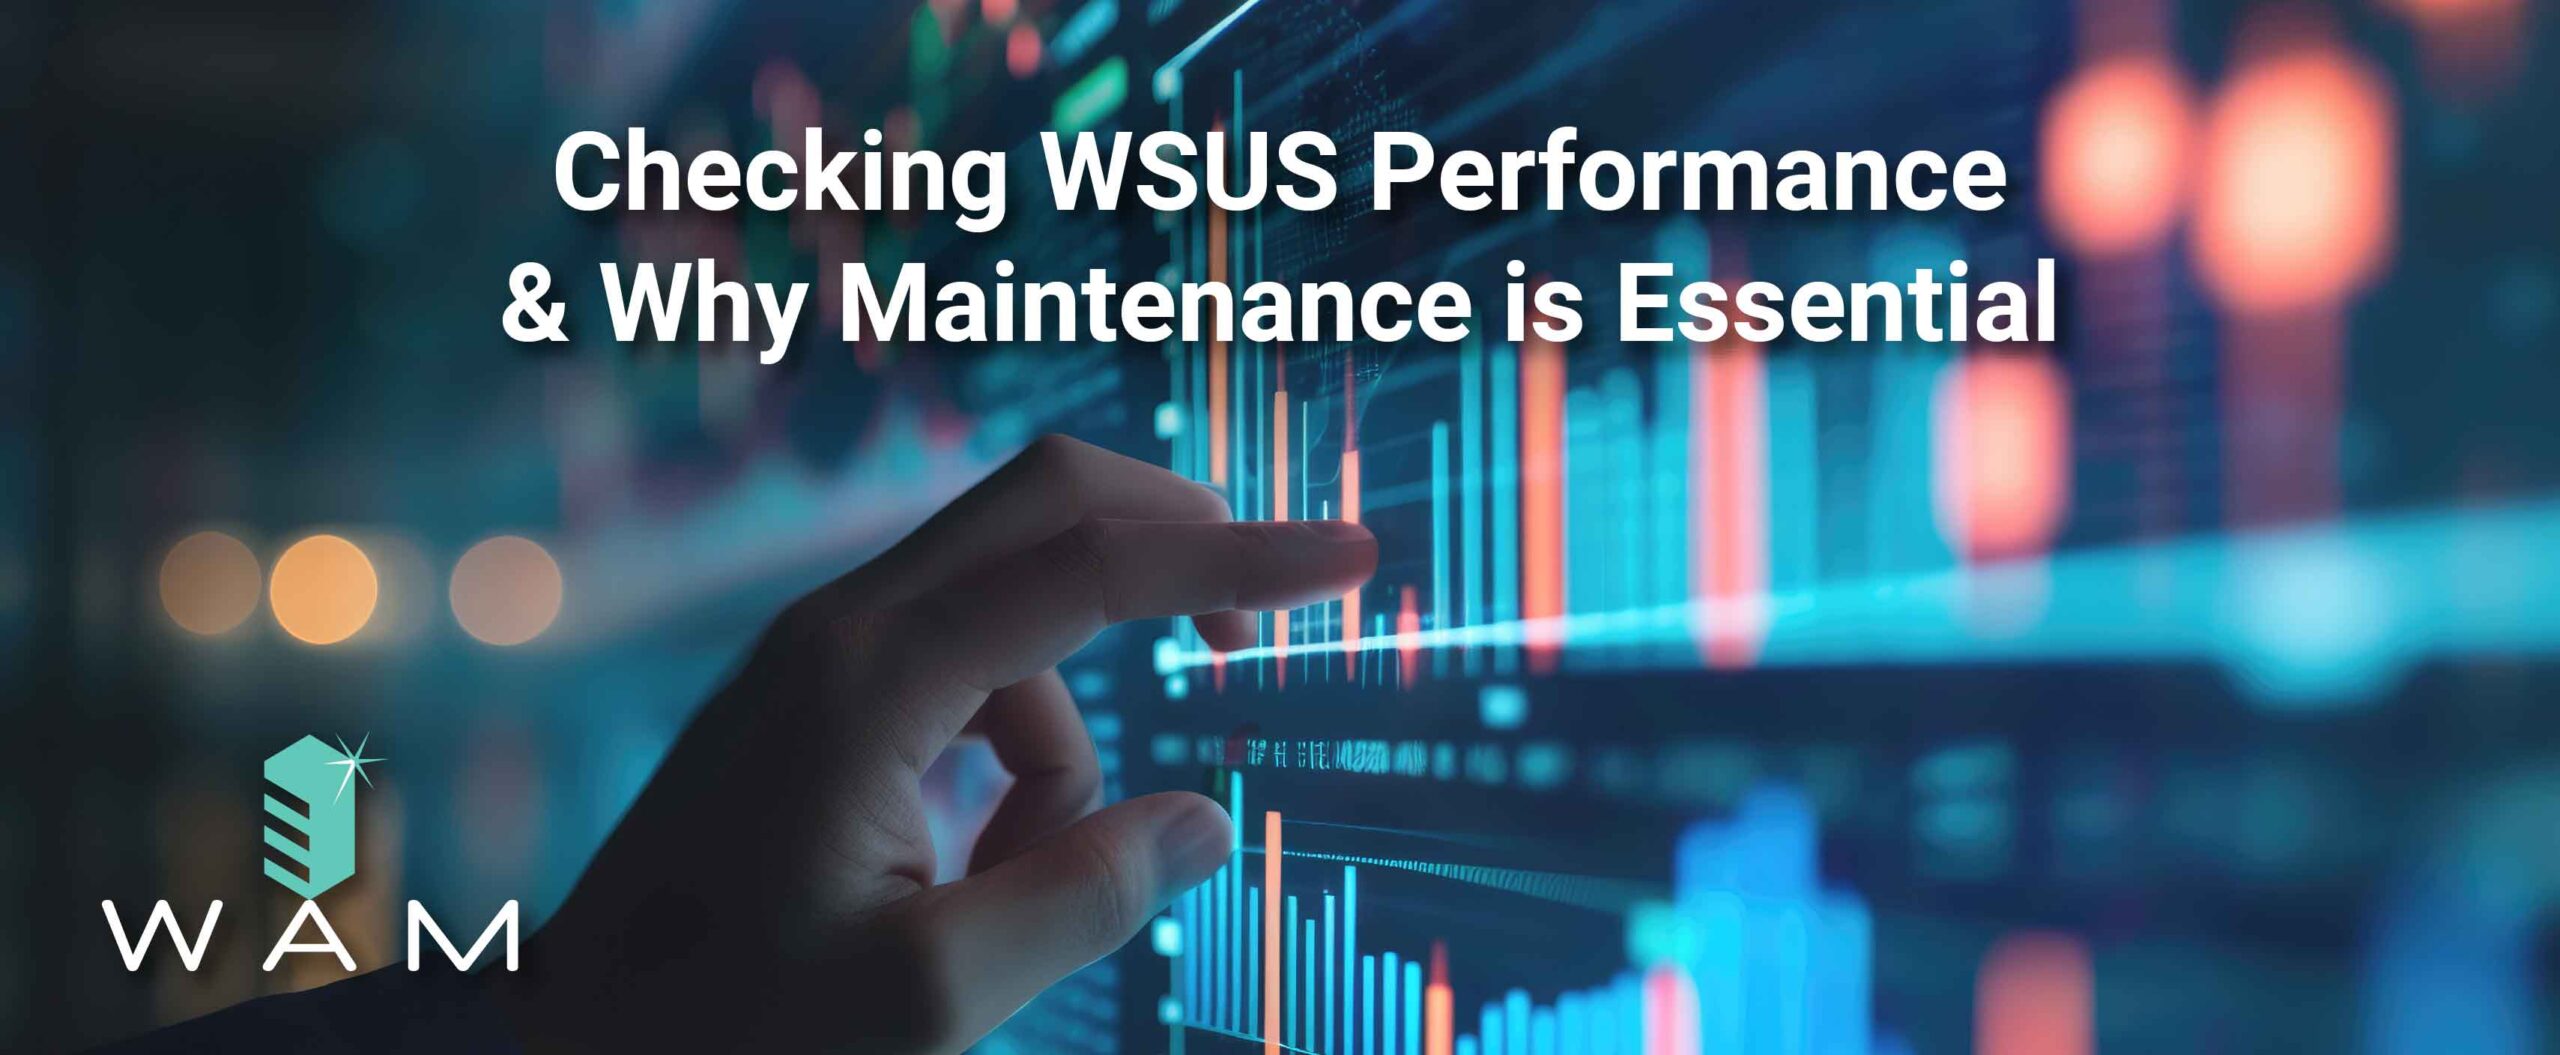 WSUS performance maintenance